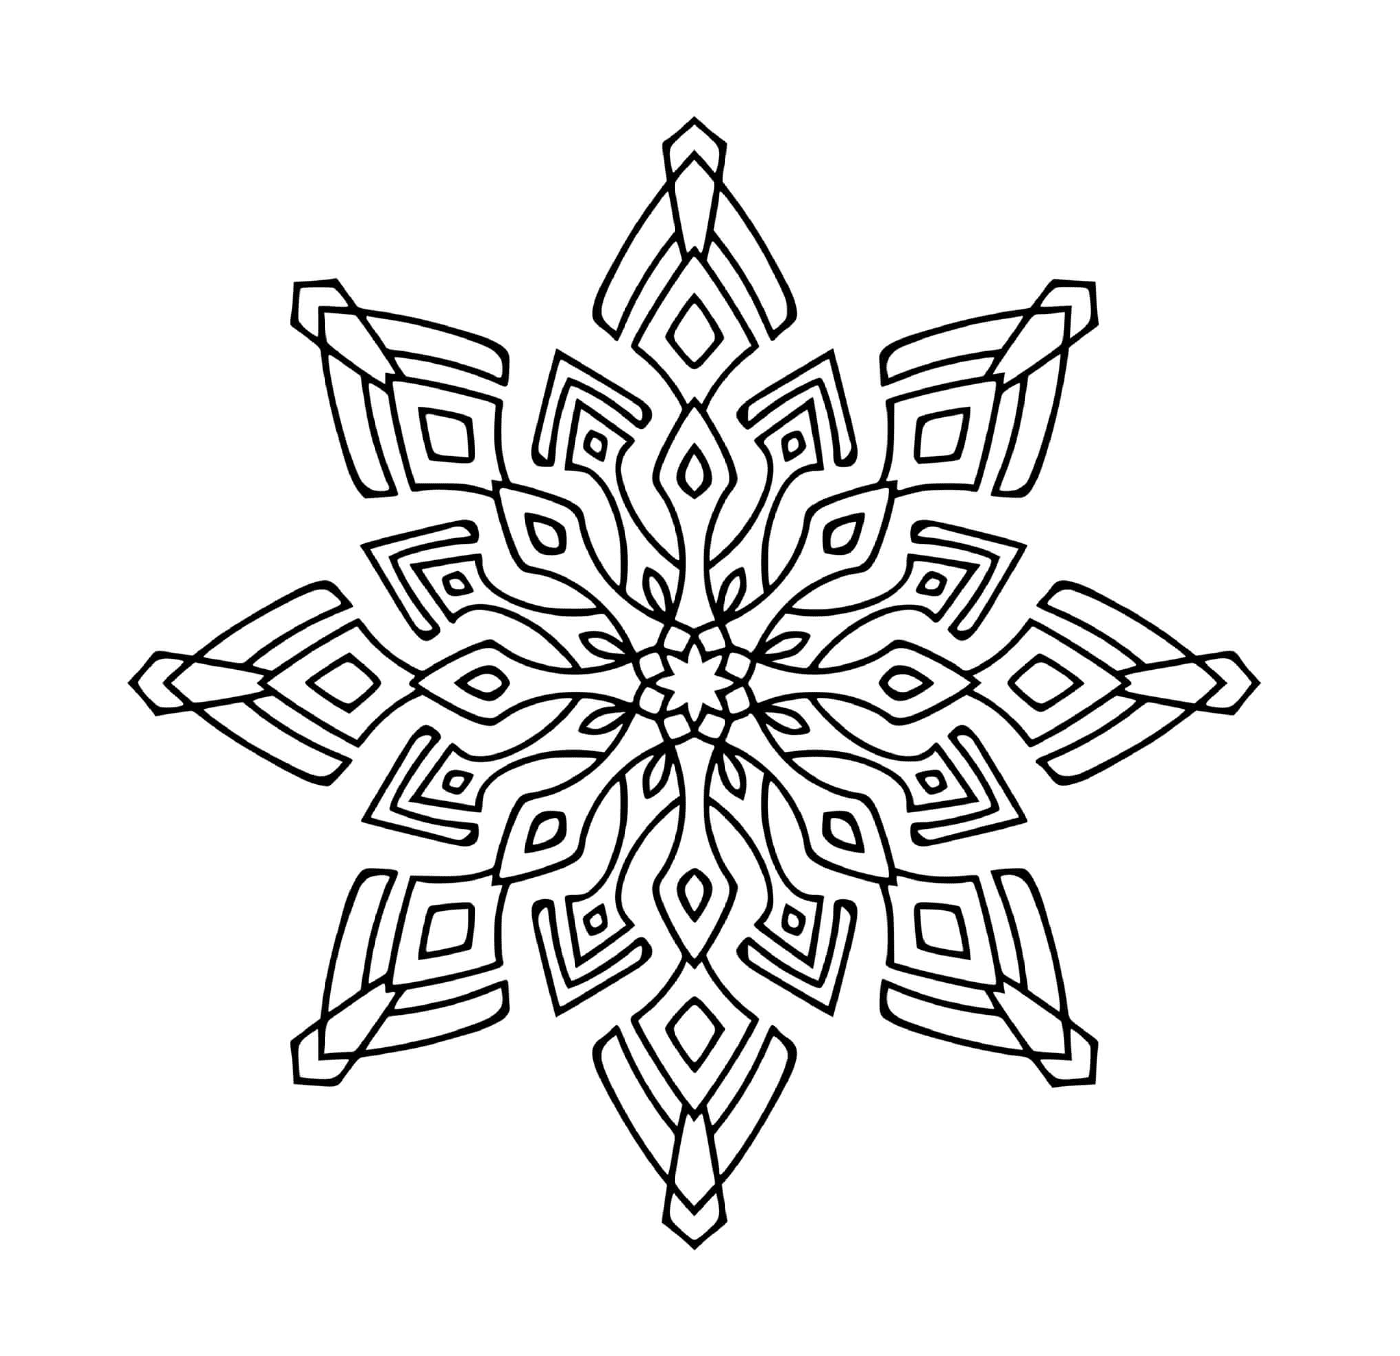  Un moderno diseño de copo de nieve en mandala 